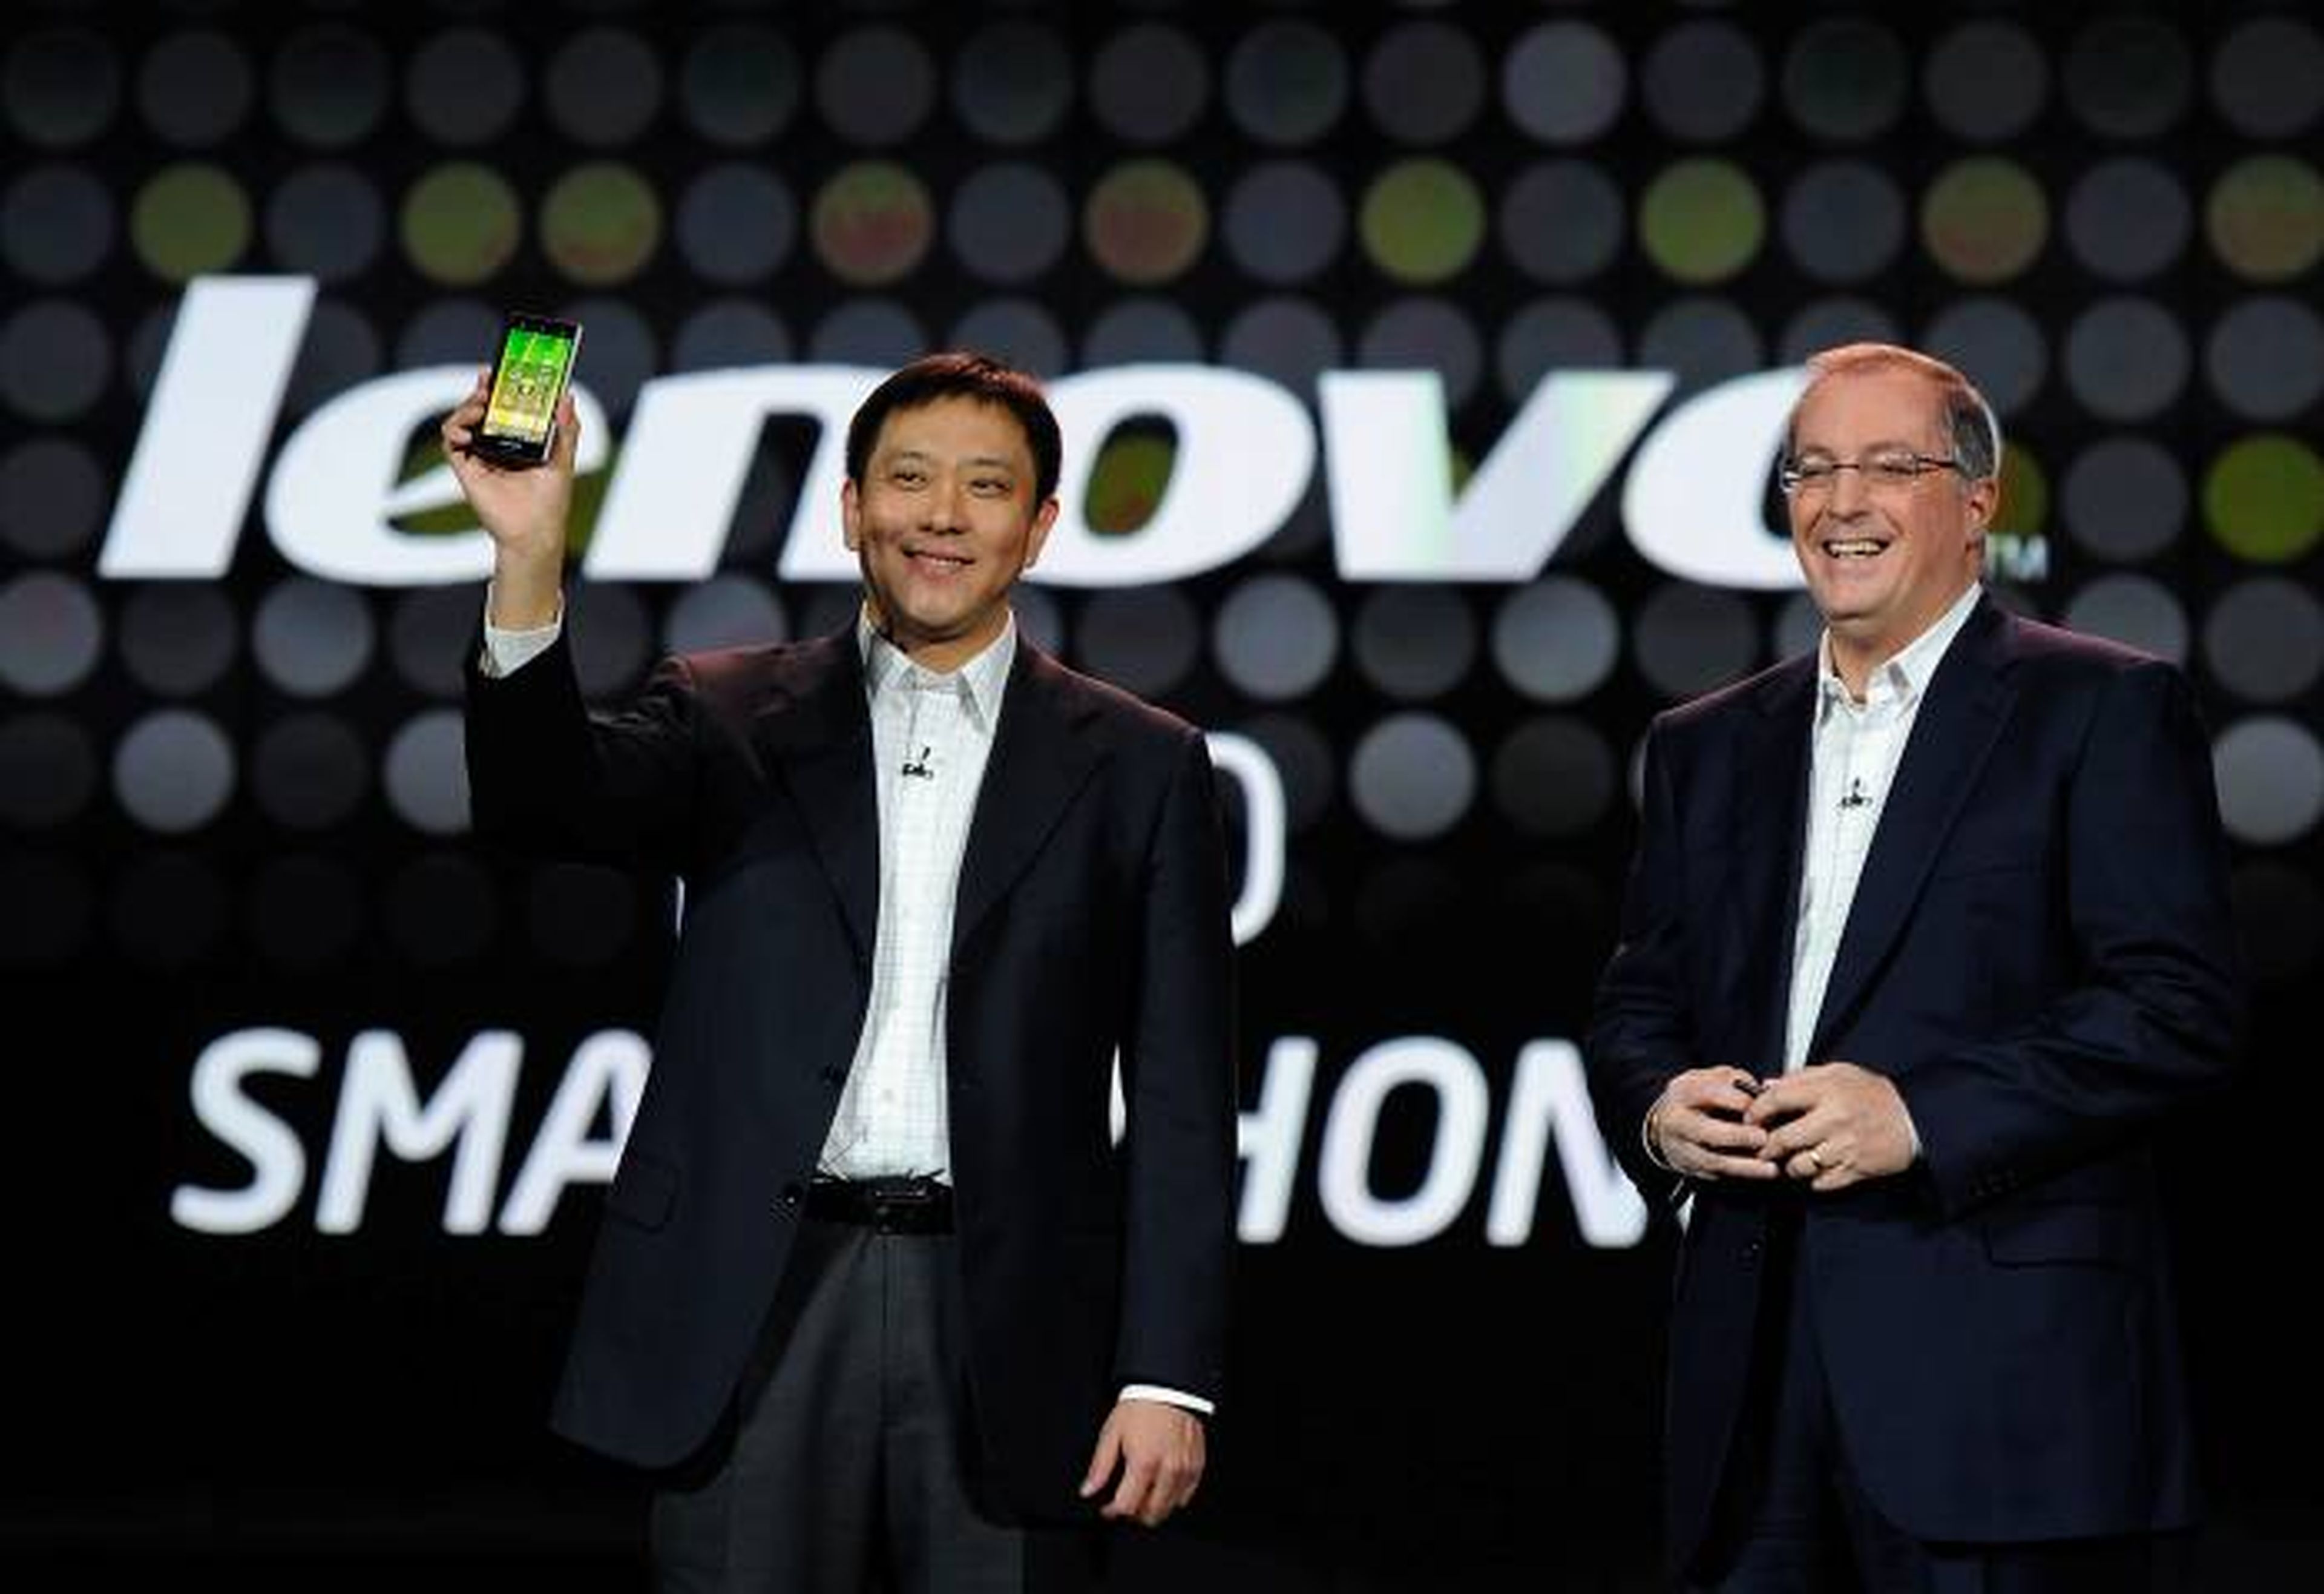 Lenovo, serie S, smartphone S860, S850 y S660, MWC 2014